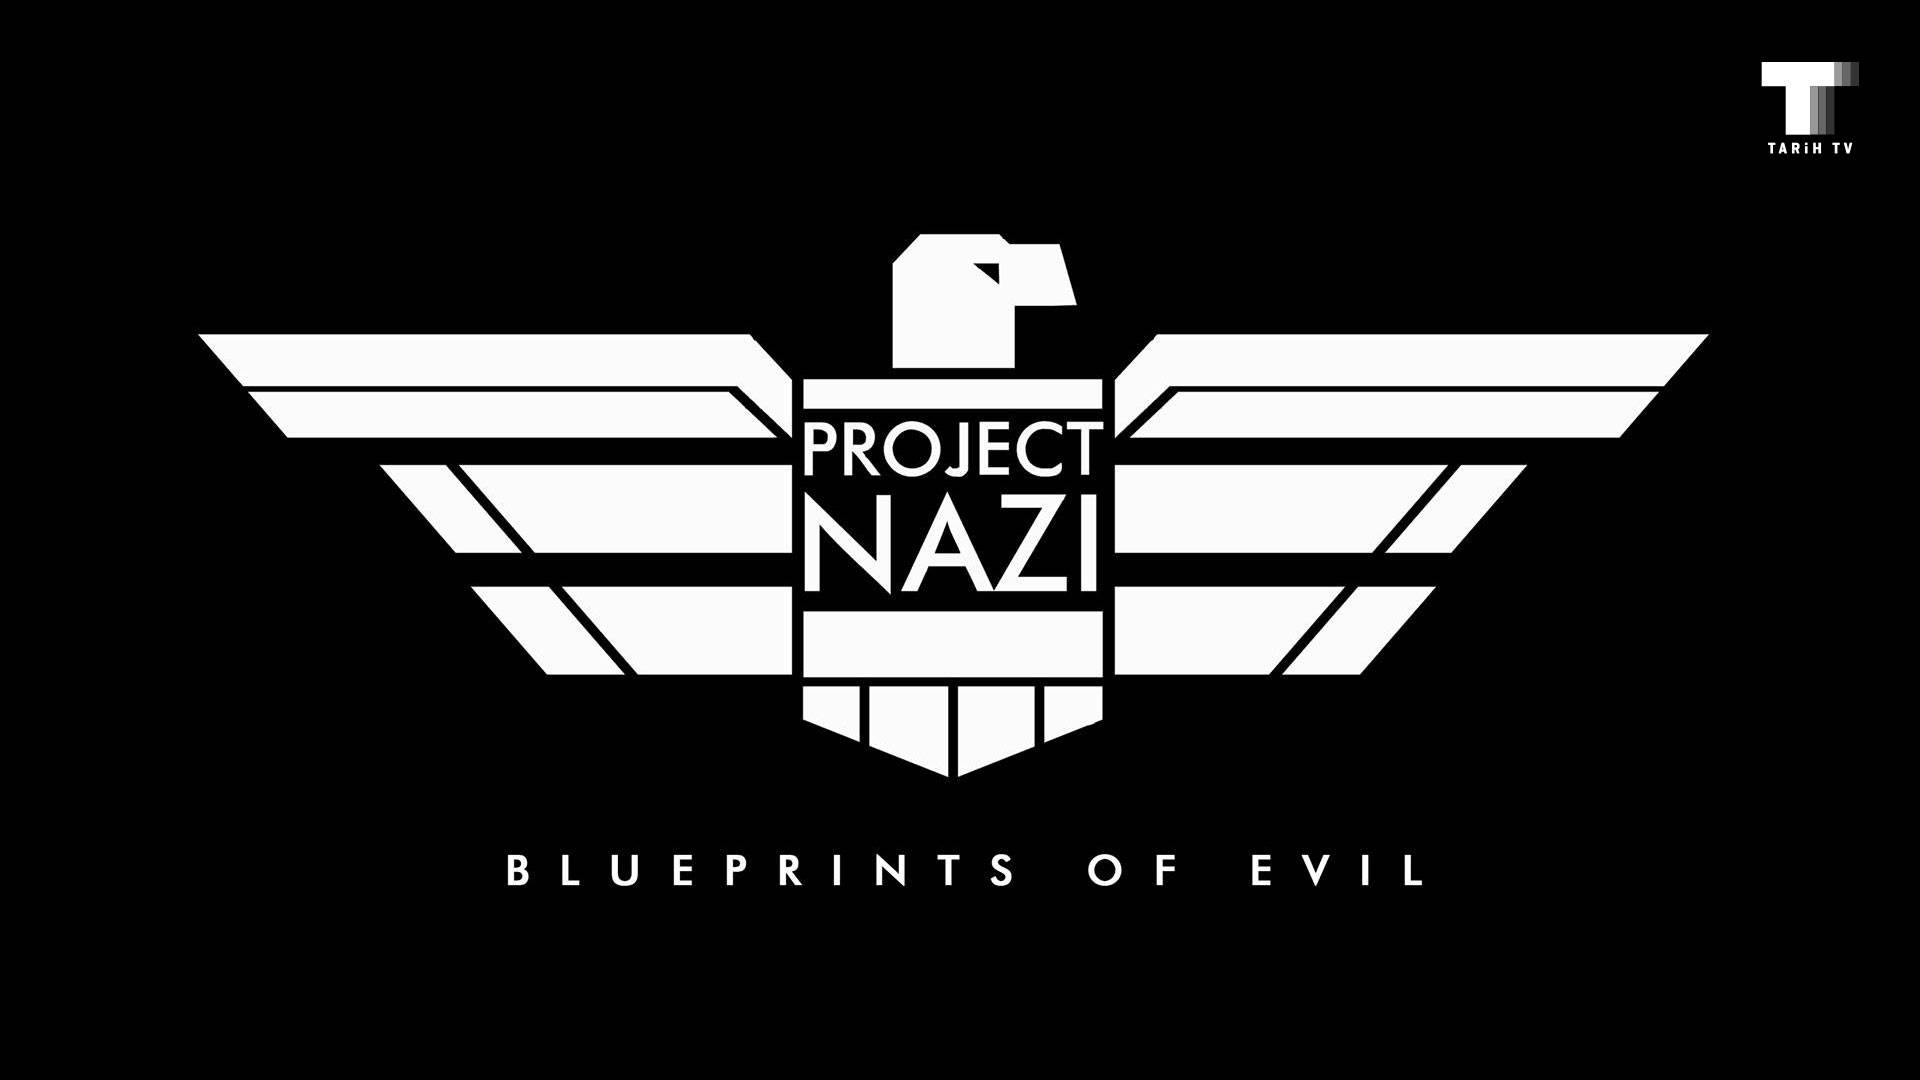 Project Nazi: The Blueprints Of Evil 